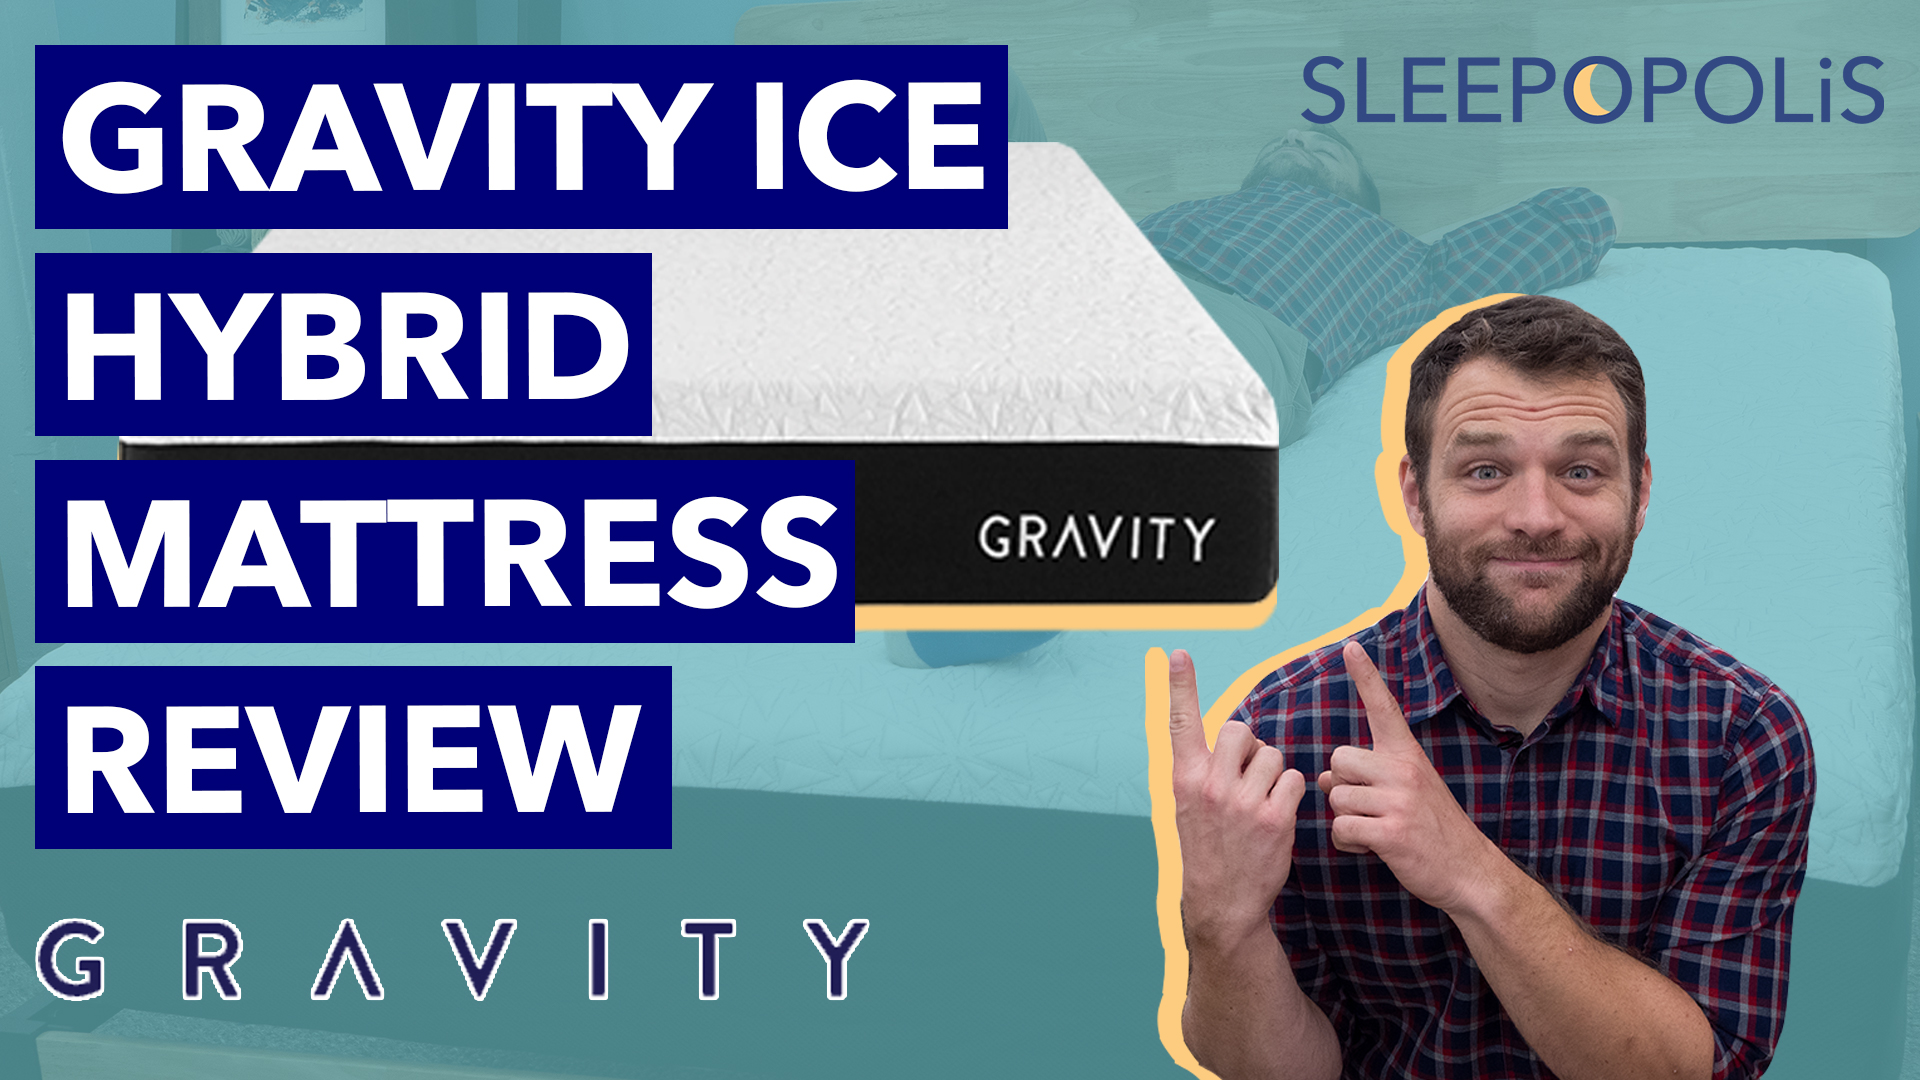 https://sleepopolis.com/wp-content/uploads/2020/11/Gravity-Ice-Hybrid-Review.jpg